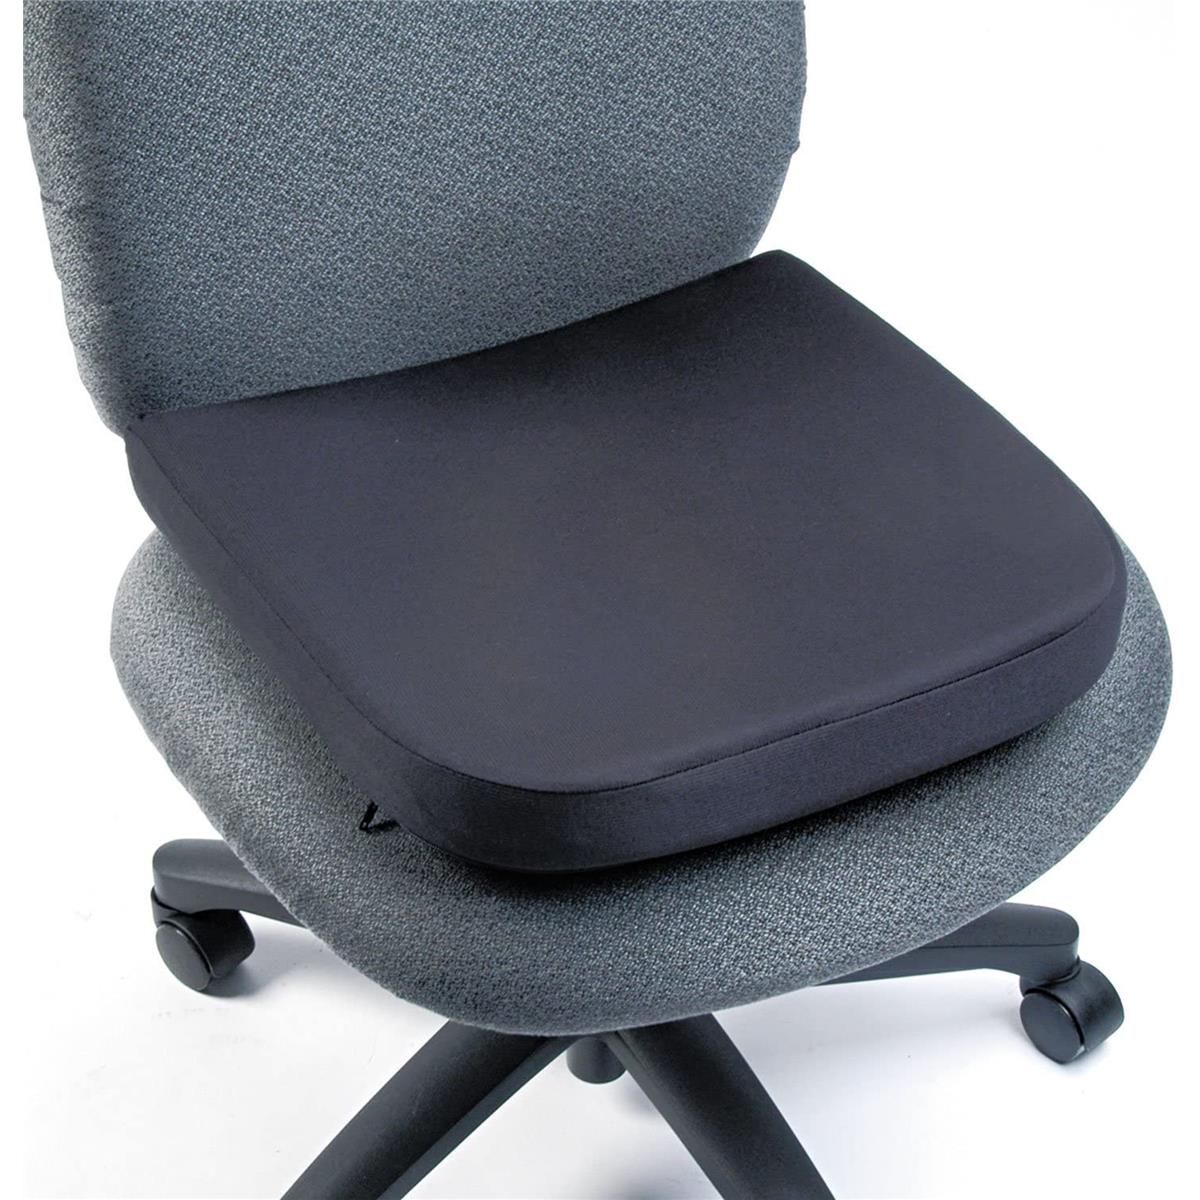 Image of Kensington Memory Foam Seat Cushion with Black Fabric Cover